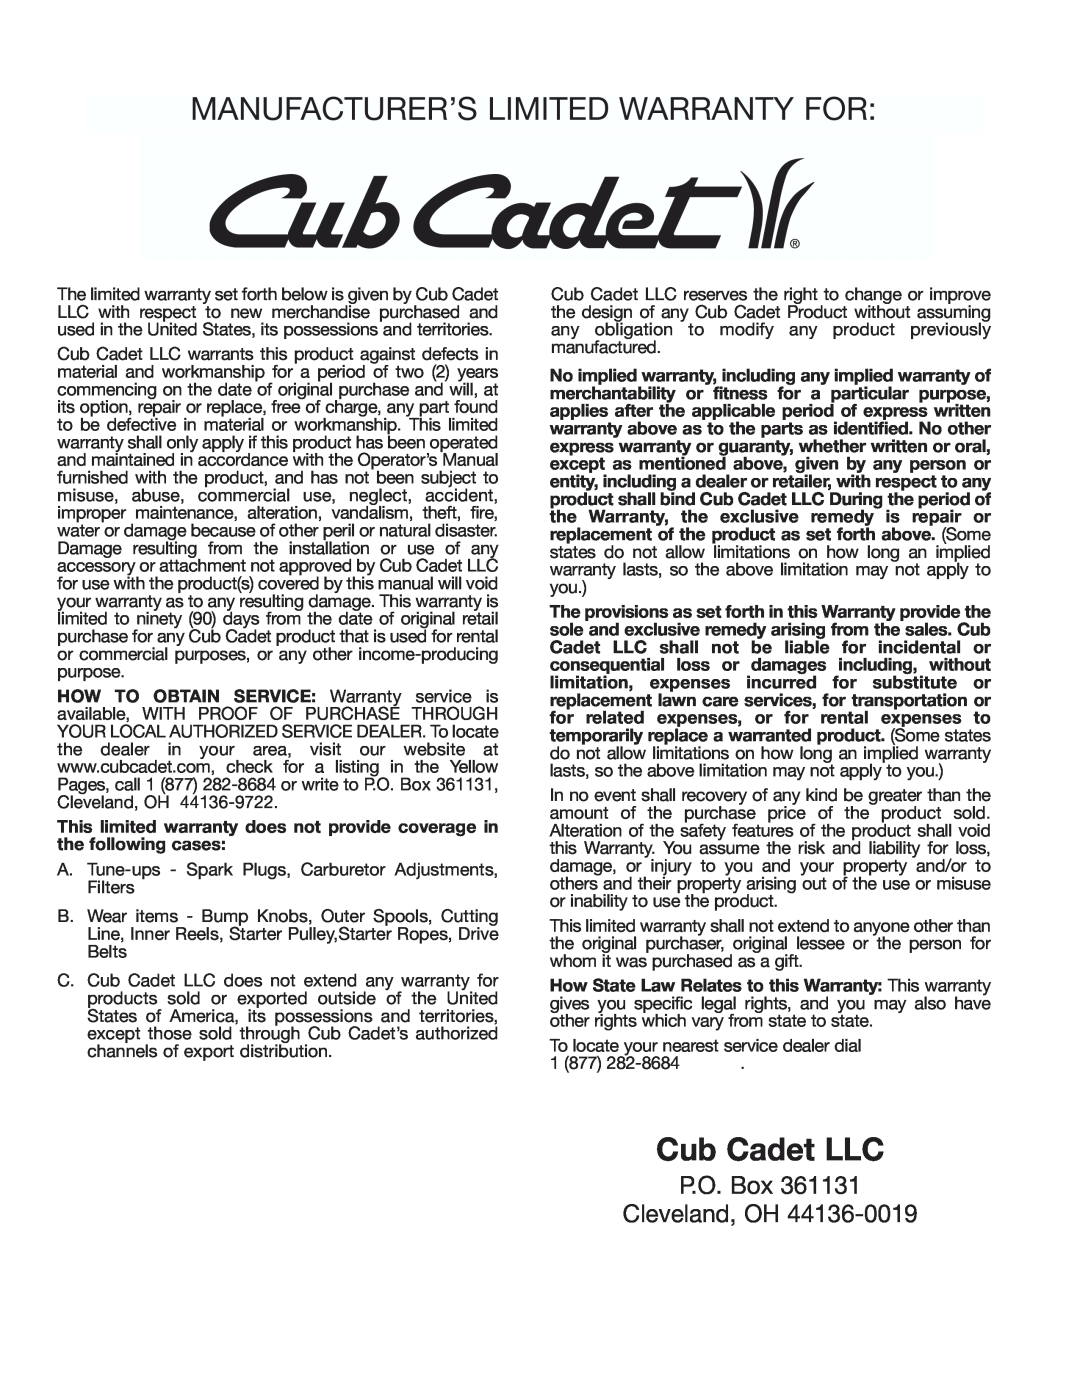 Cub Cadet CC3000 manual Cub Cadet LLC, P.O. Box Cleveland, OH, Manufacturer’S Limited Warranty For 